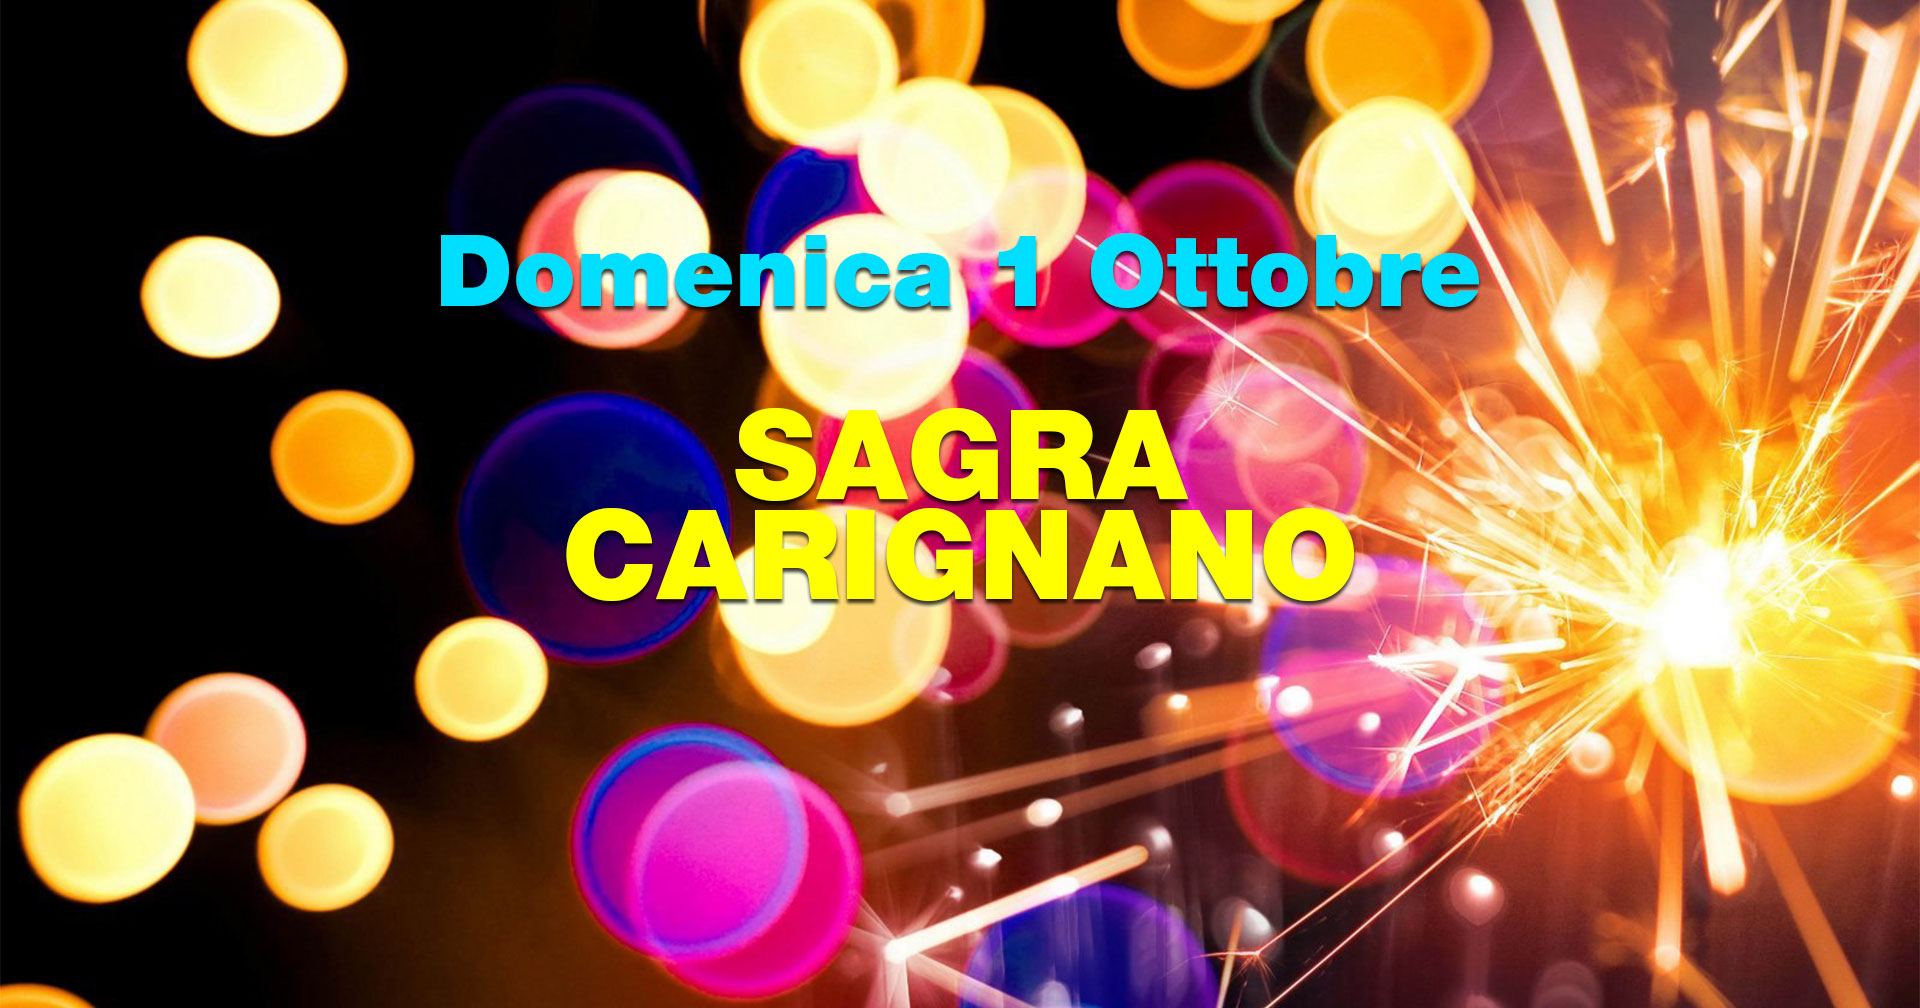 Sagra Carignano 2017